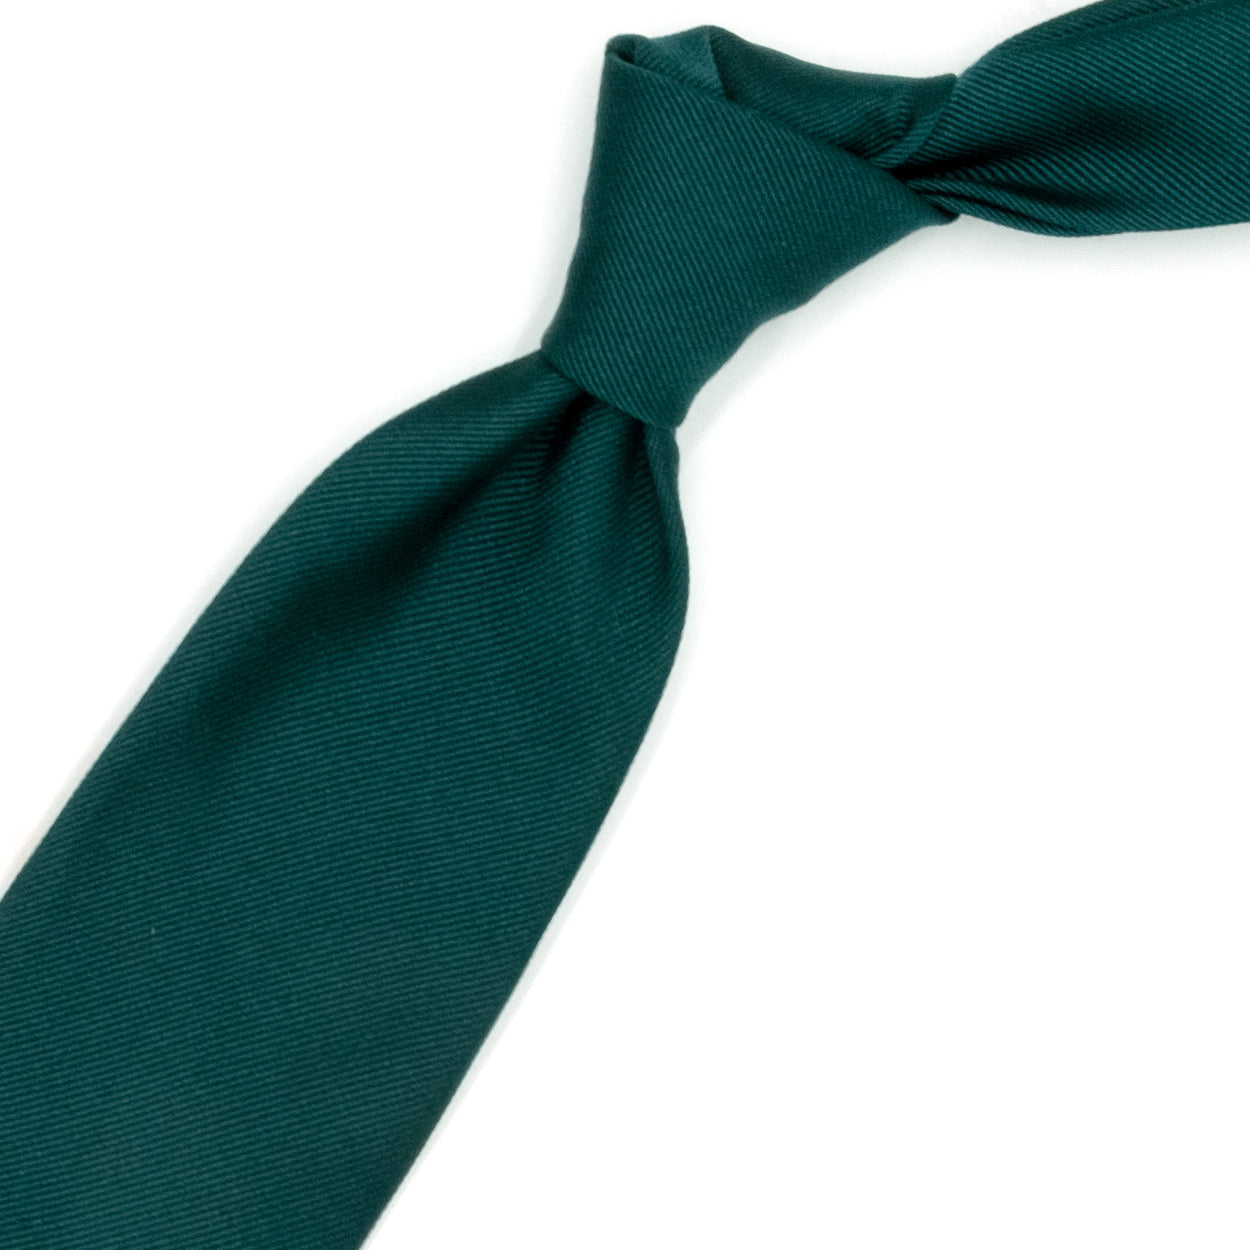 Solid green tie